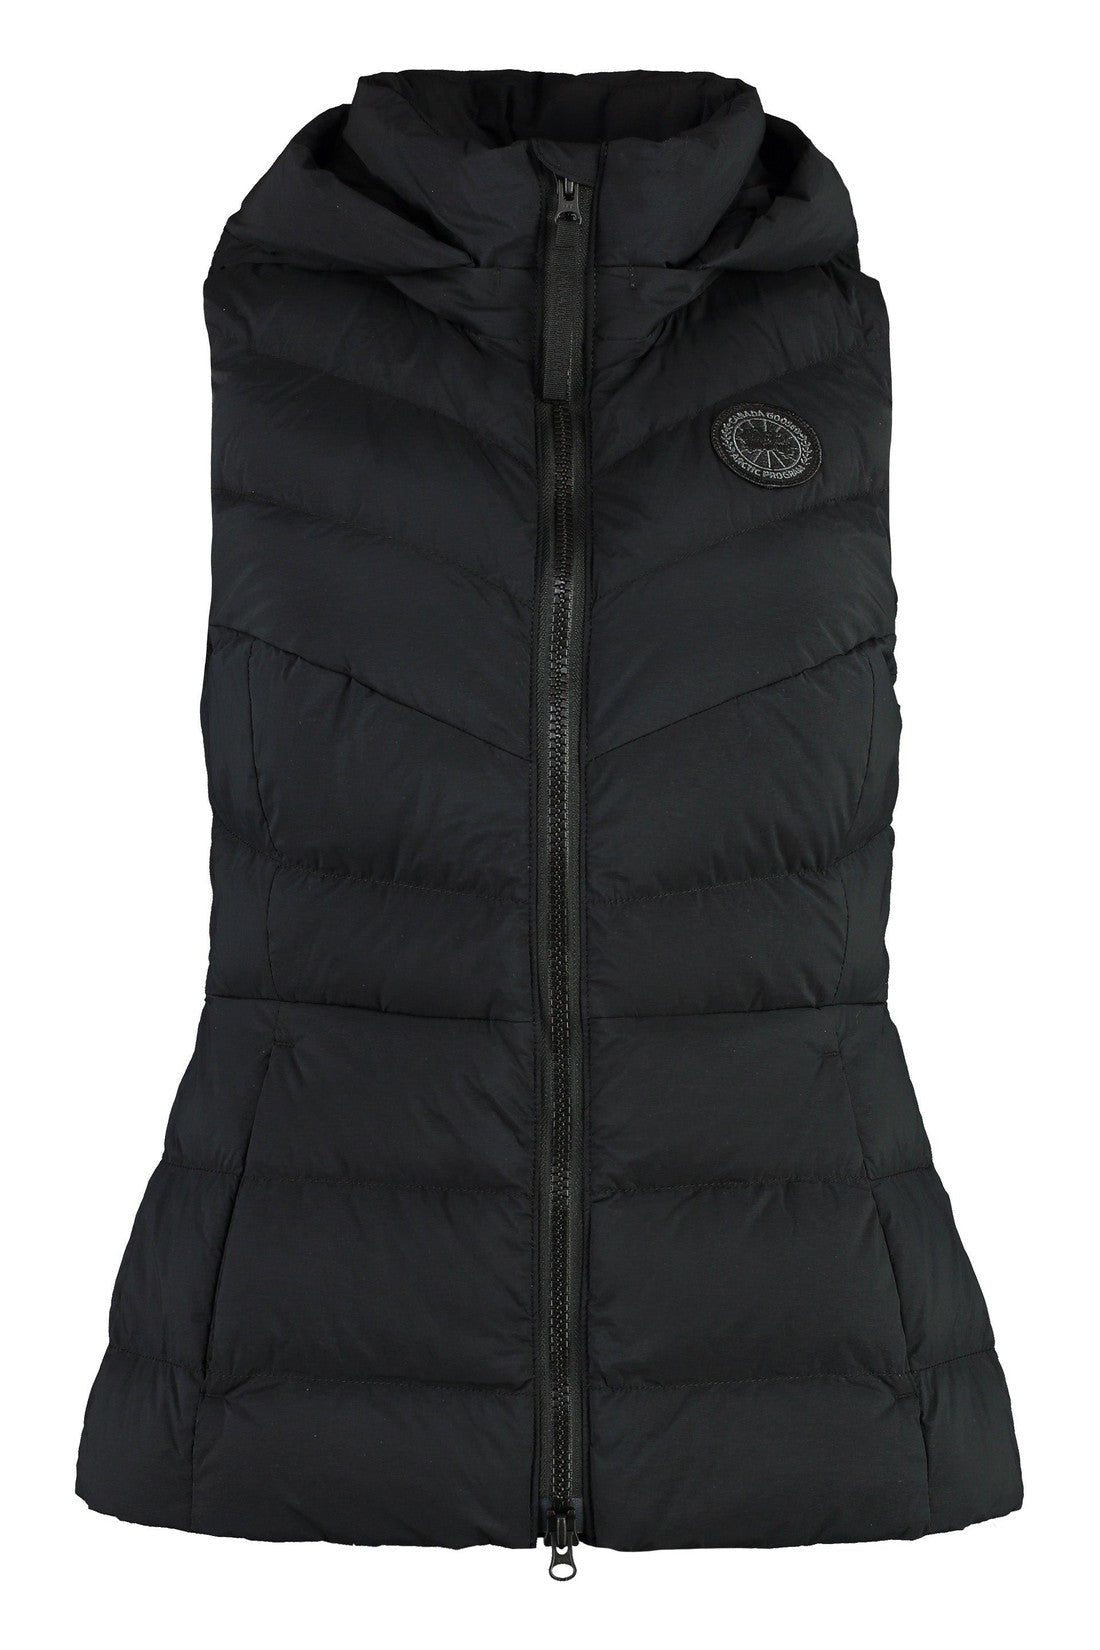 Canada Goose Black-OUTLET-SALE-Clair bodywarmer jacket-ARCHIVIST